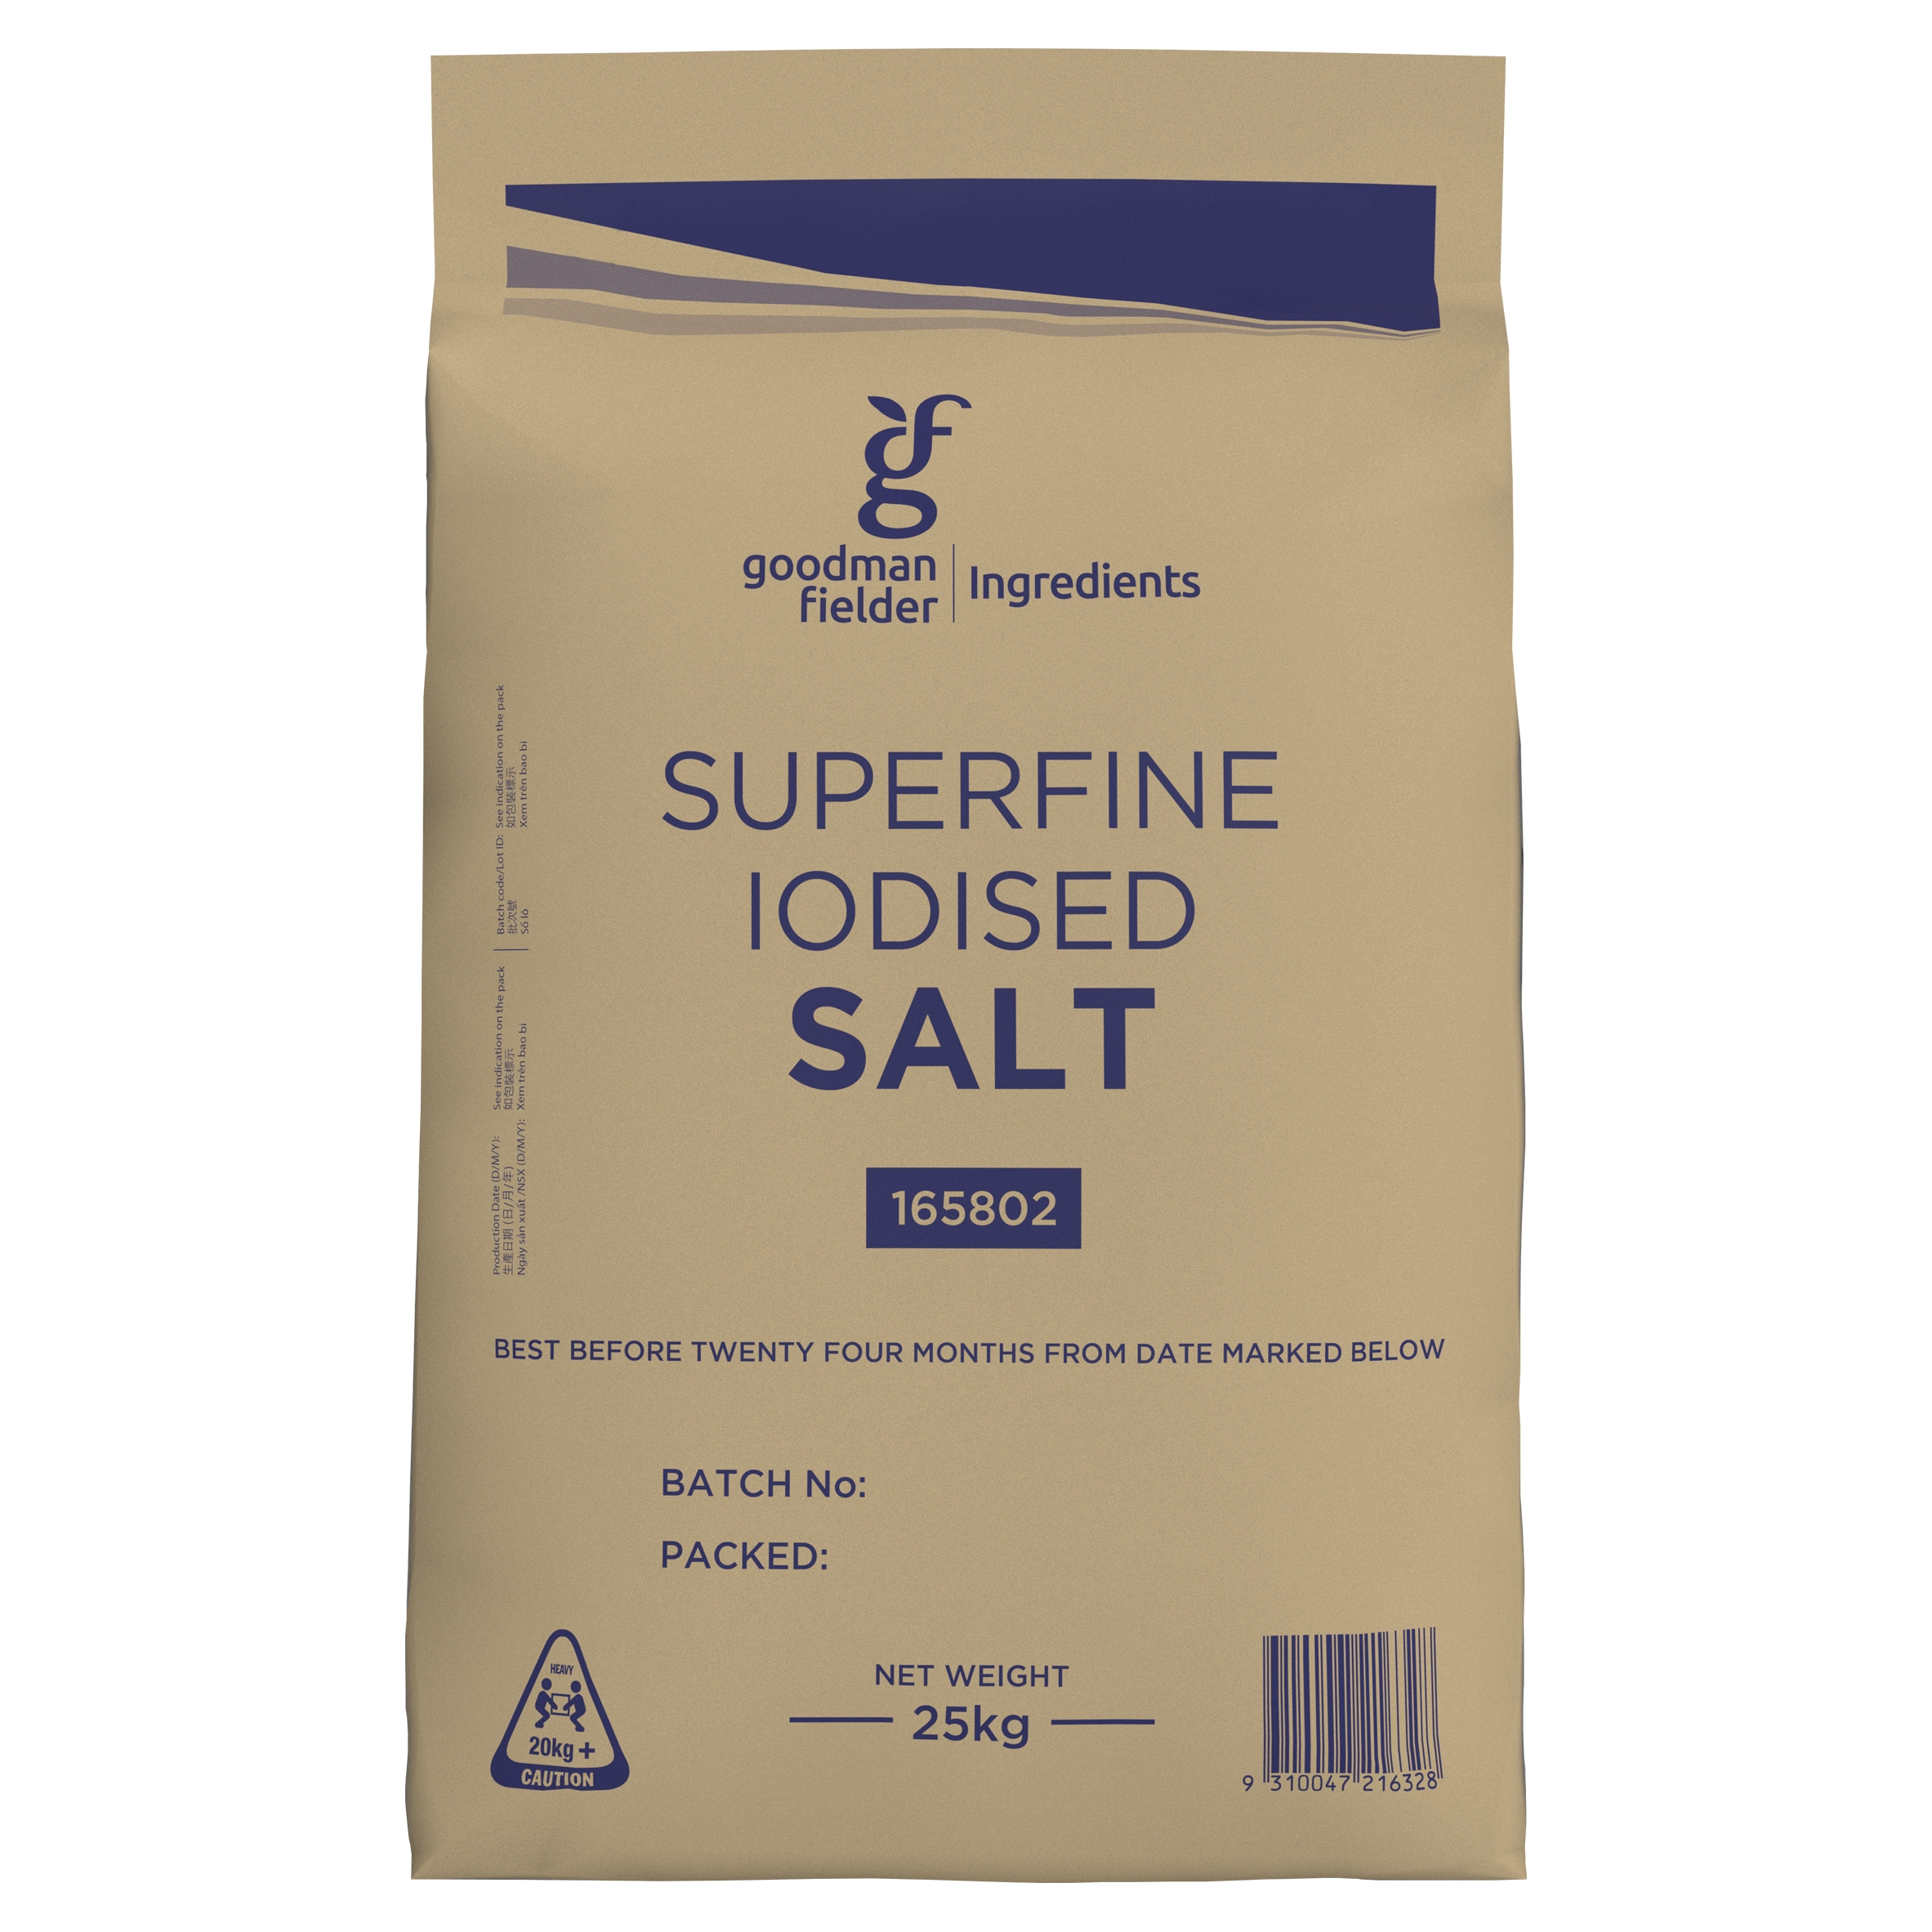 Goodman Fielder Ingredients Superfine Iodised Salt 25kg product photo